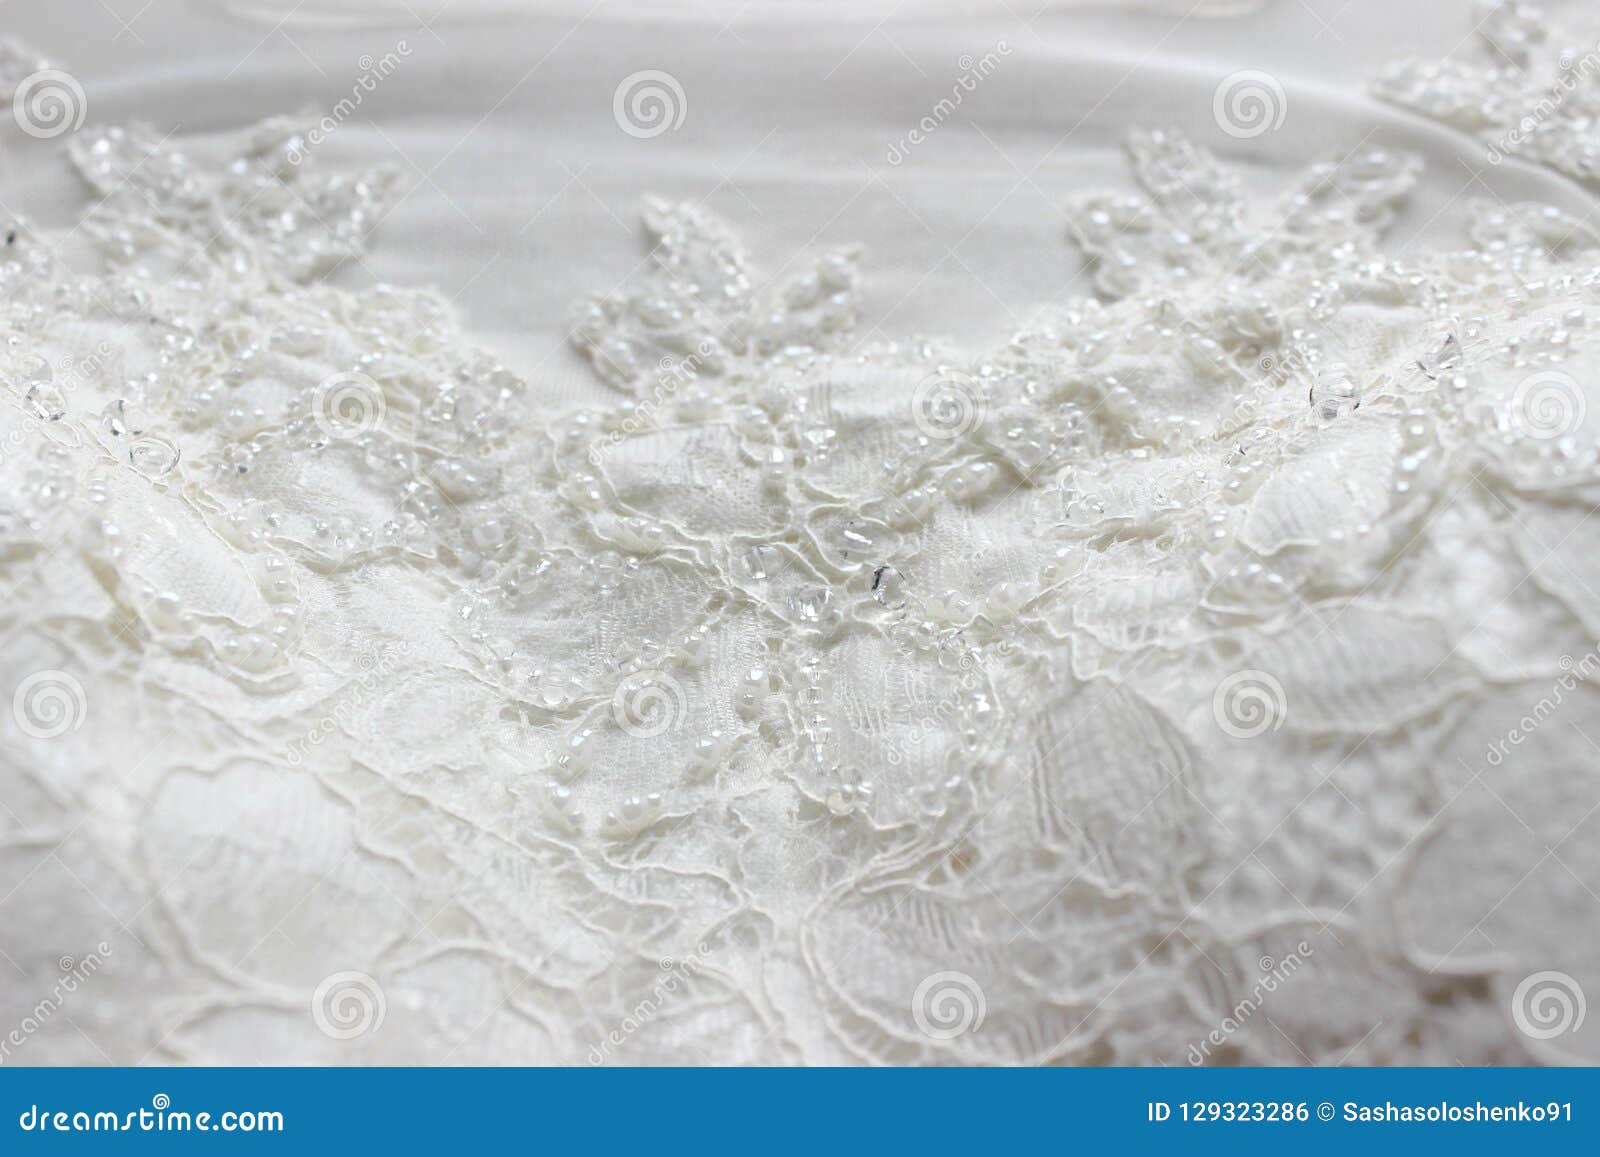 Beautiful Details of a Wedding Dress Beadwork Close-up Stock Photo ...